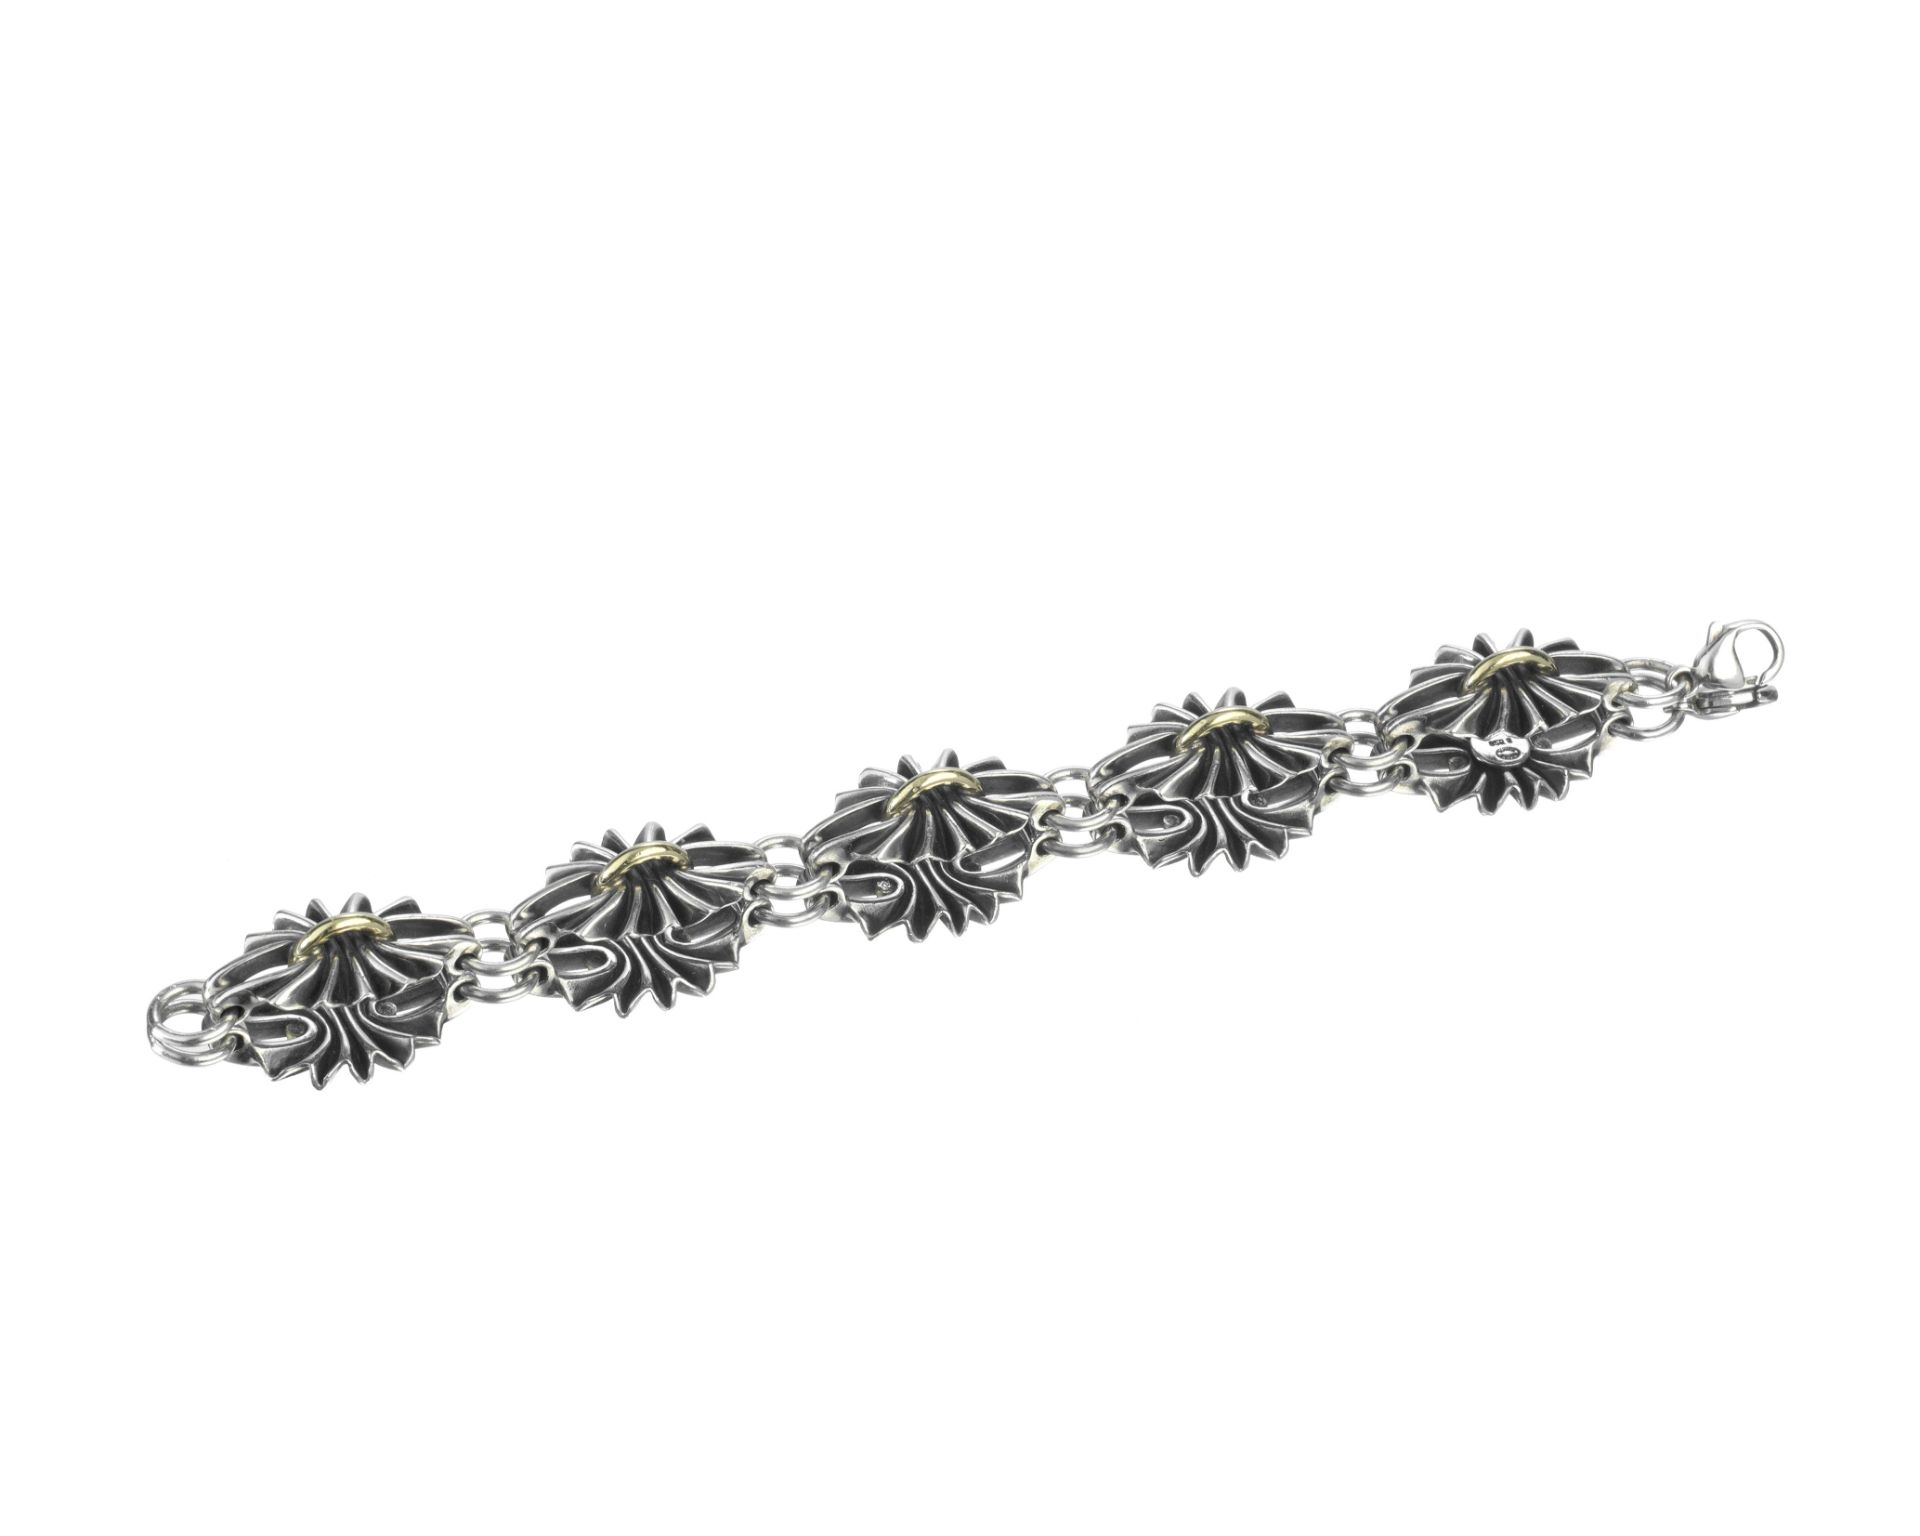 GEORG JENSEN: a Danish silver bracelet pattern 394, designed by Lene Munthe, post 1945 marks